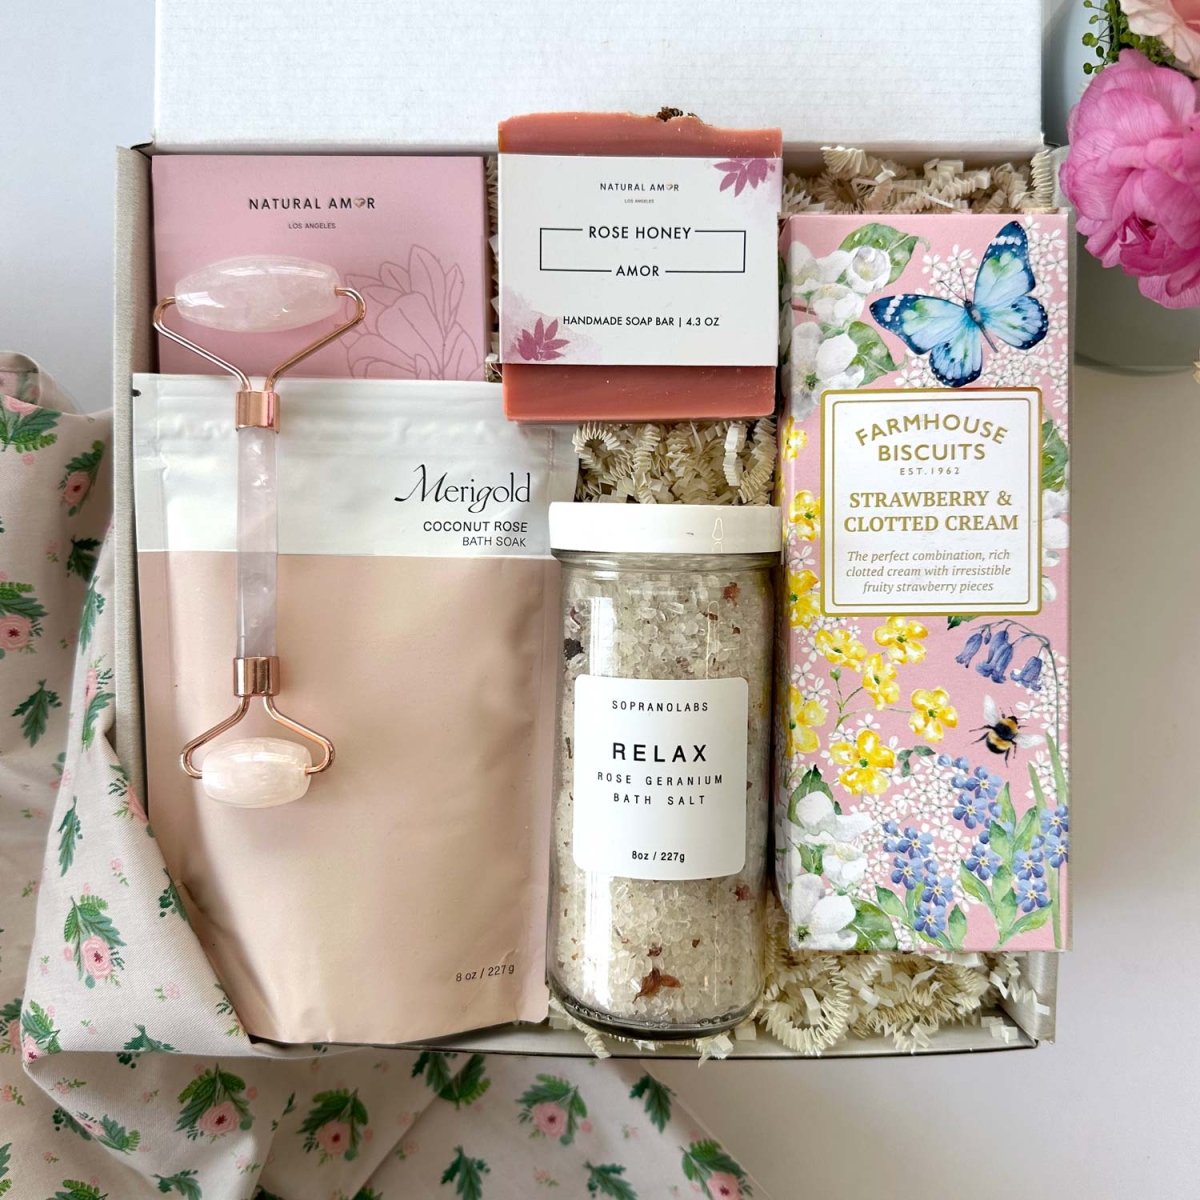 kadoo rose garden gifts. Inside box: bath soak, relax bath salt, farmhouse biscuit, handmade soap, rose quartz facial roller and more.